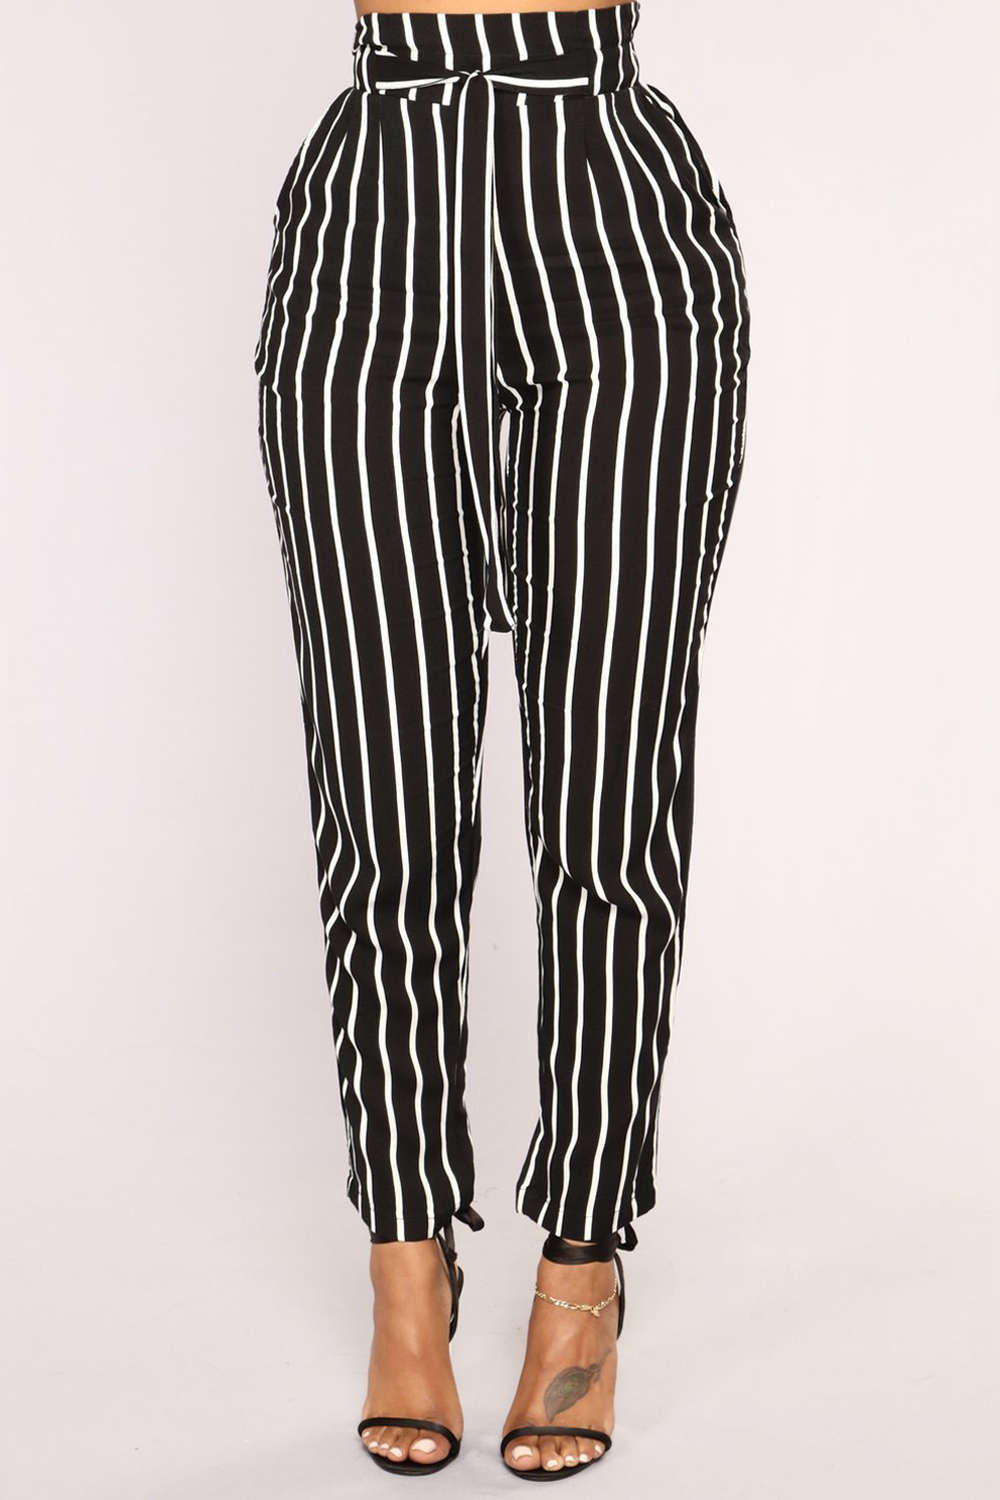 Iyasson Women's Striped High Waisted Pants